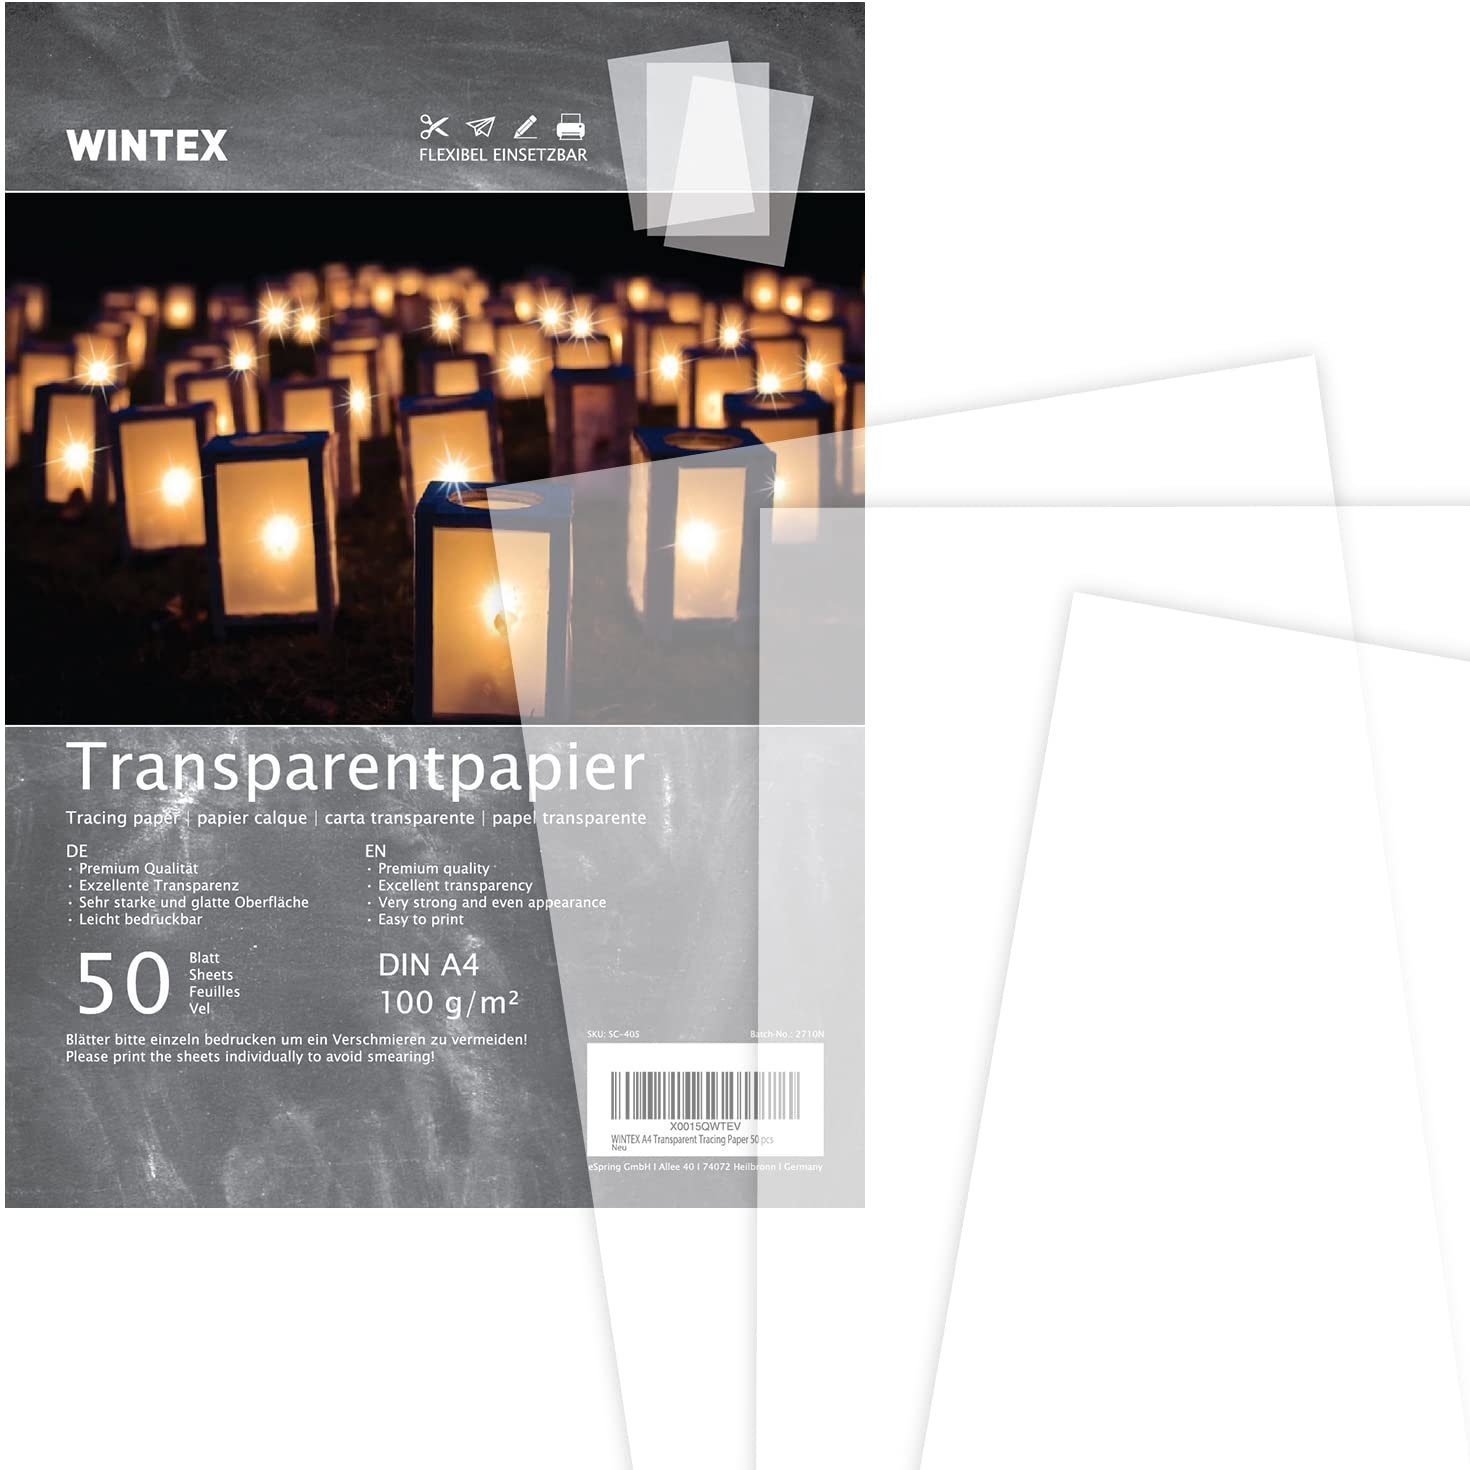 WINTEX Transparentpapier Transparentpapier DIN A4 50 Blatt 100g/qm, Transparentpapier A4 50 Blatt 100g/qm